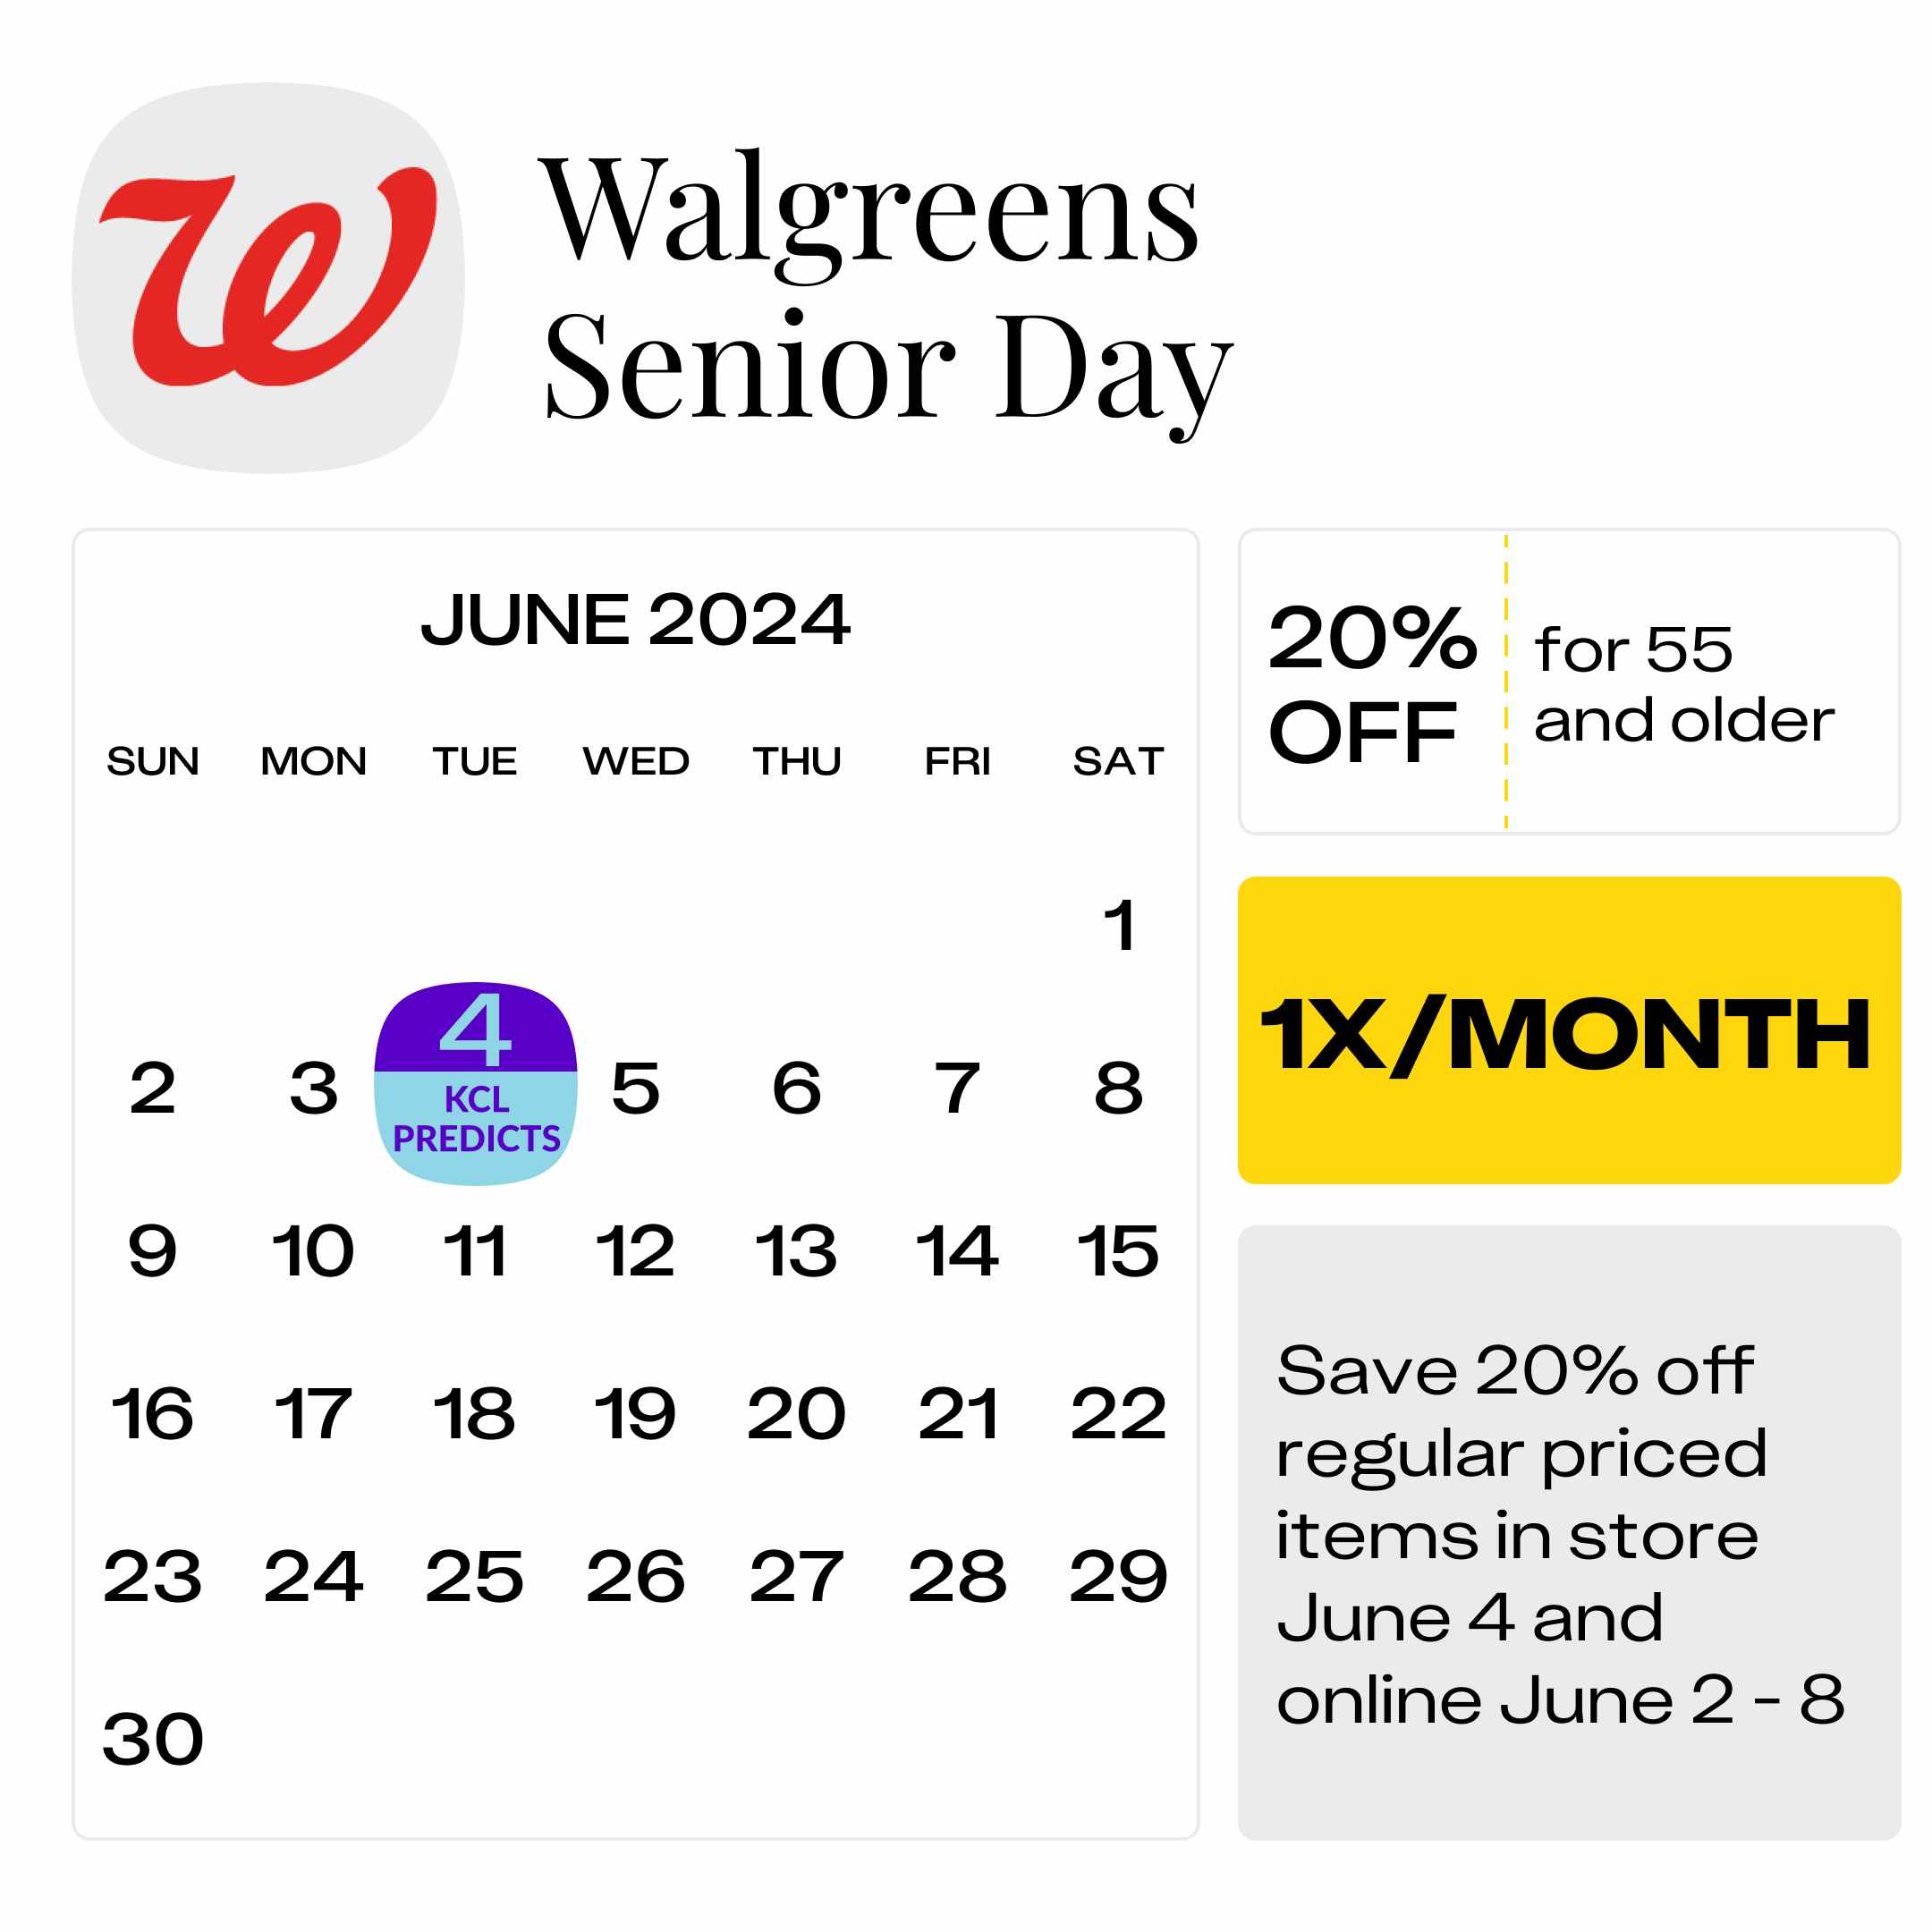 Walgreens-Senior-Day-June